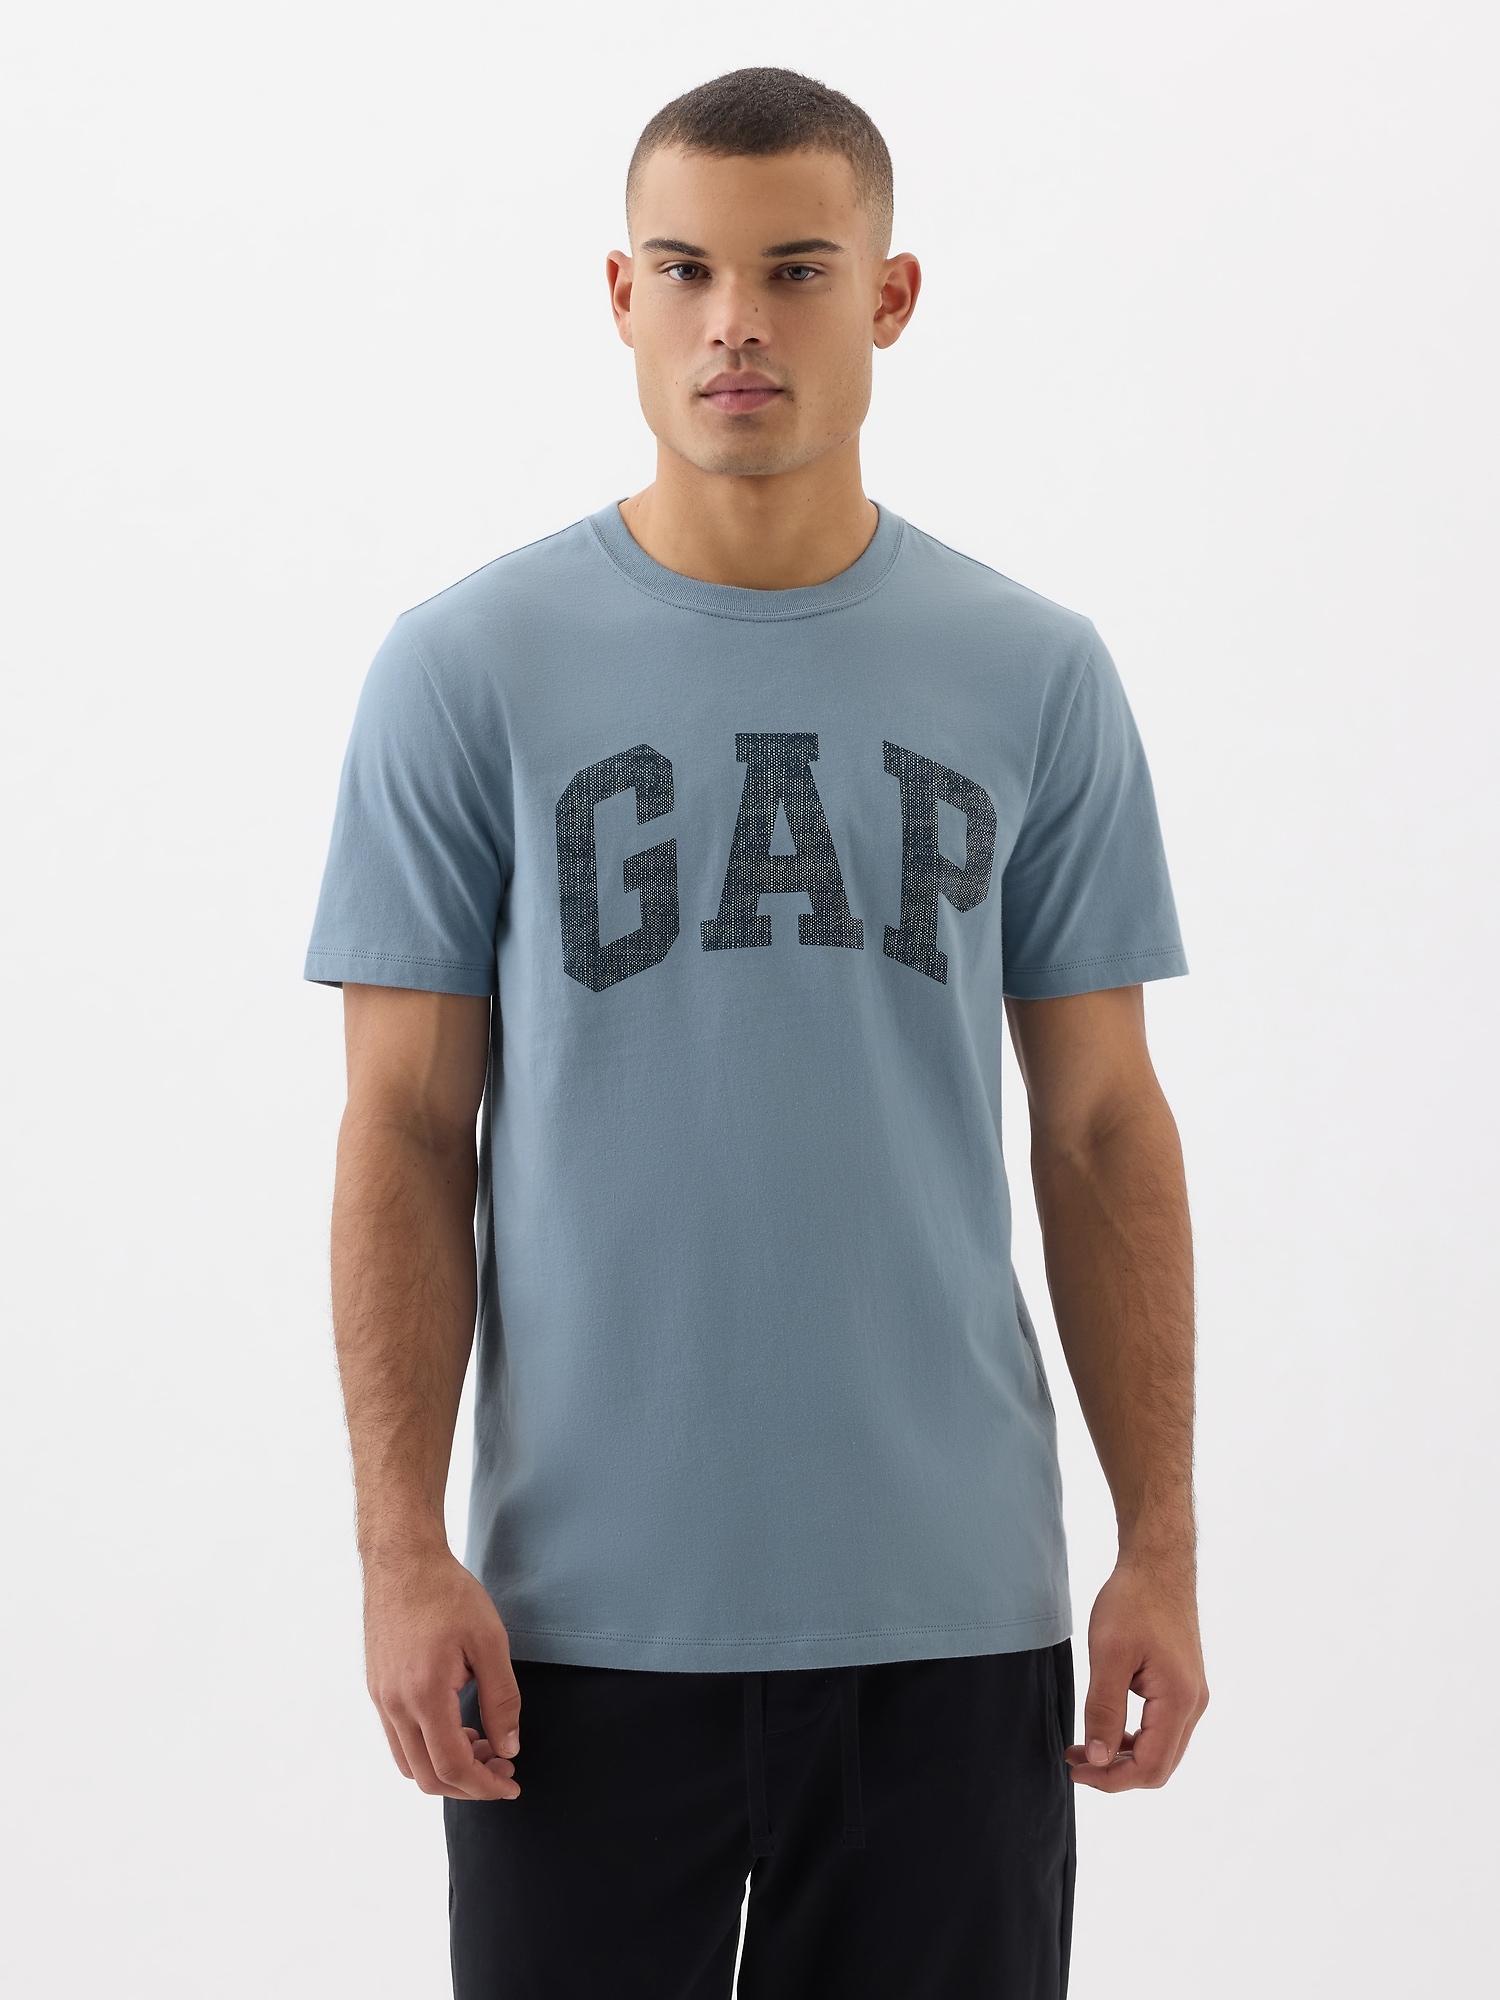 GAP T-shirt with logo - Men's